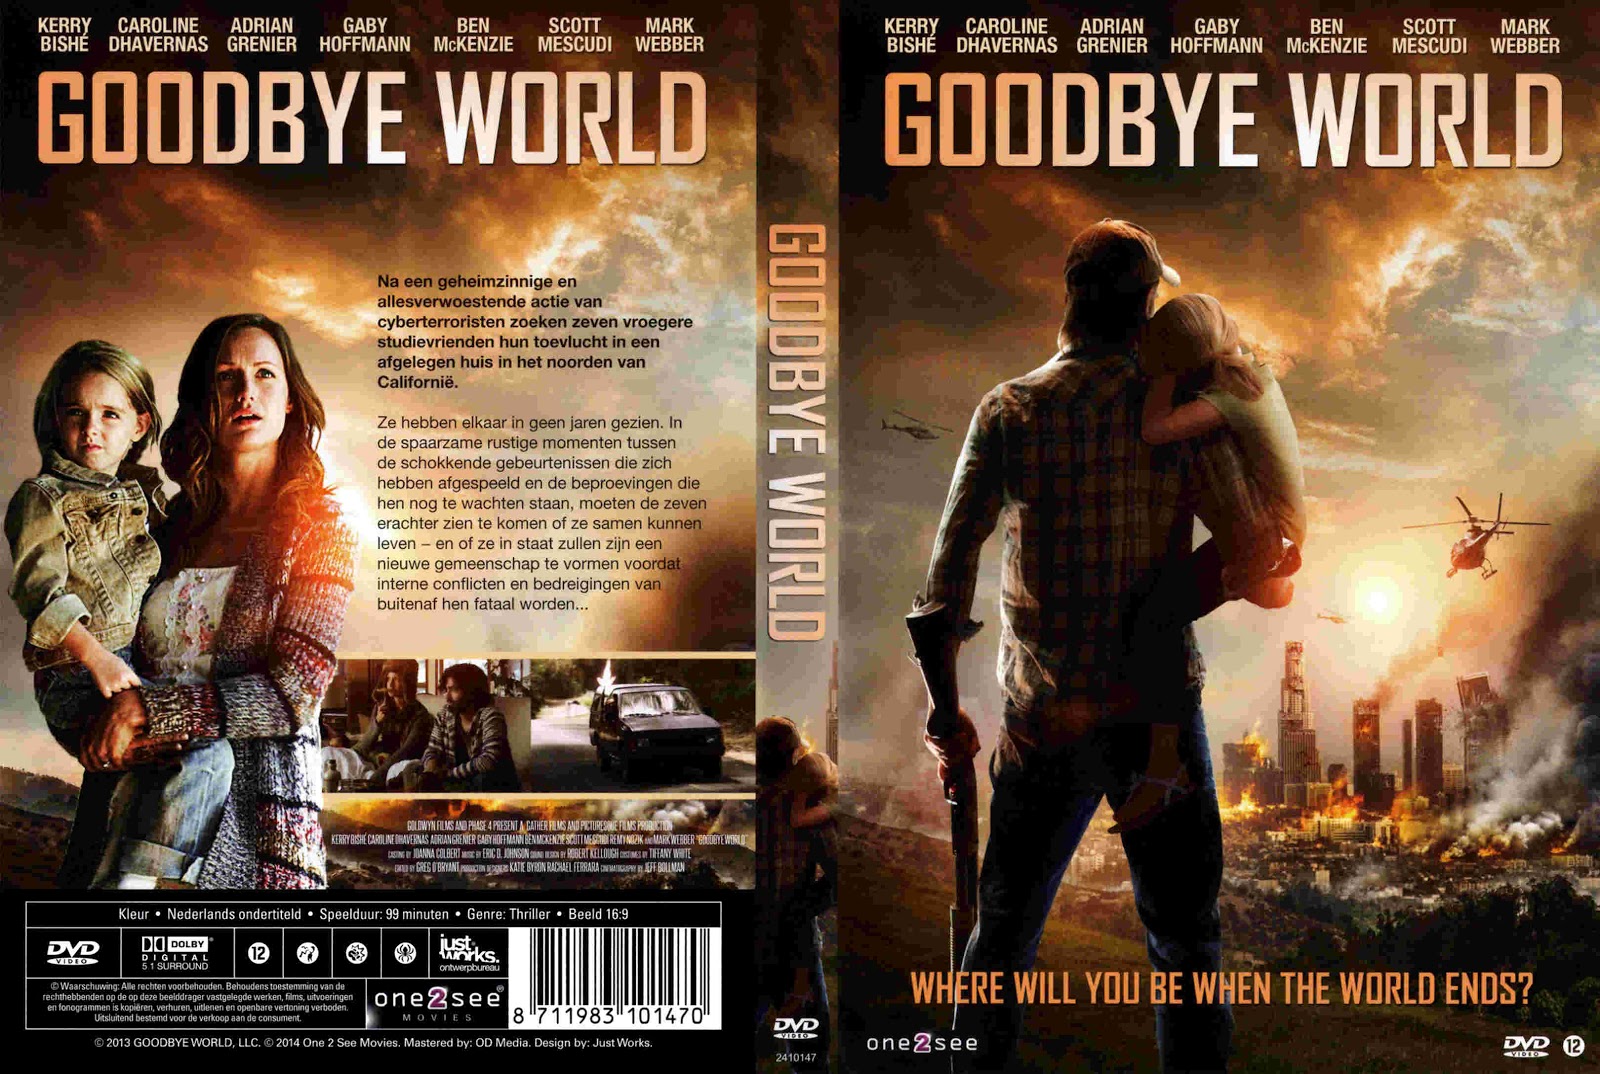 tudo-gtba-goodbye-world-2013-dutch-r2-cover-label-dvd-movie